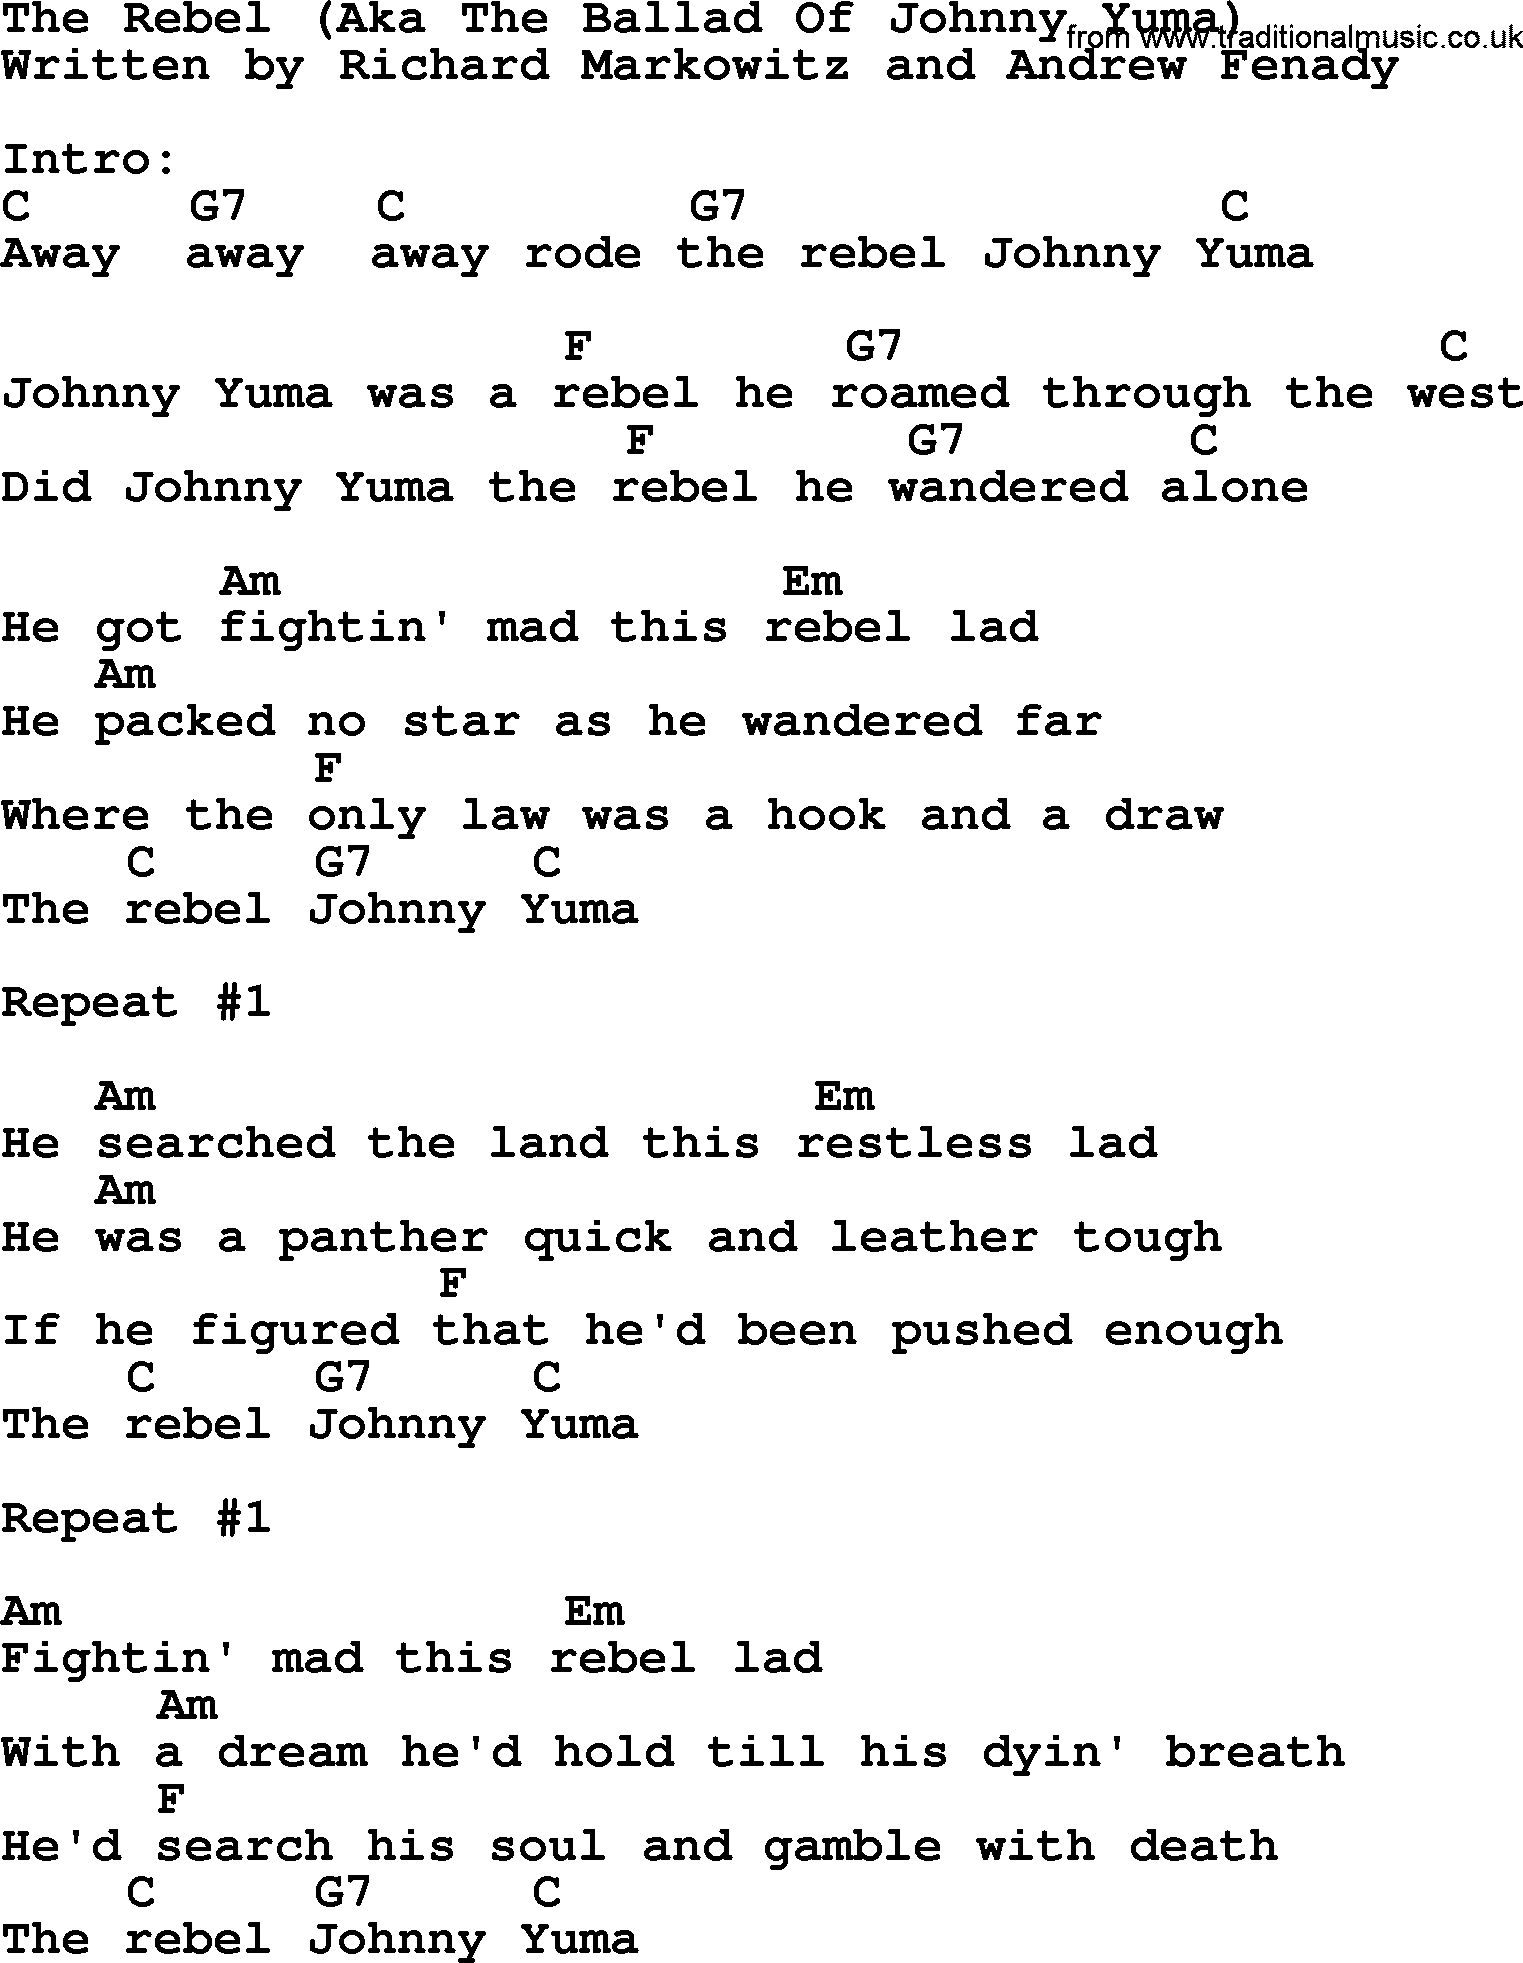 Johnny Cash song The Rebel(The Ballad Of Johnny Yuma), lyrics and chords